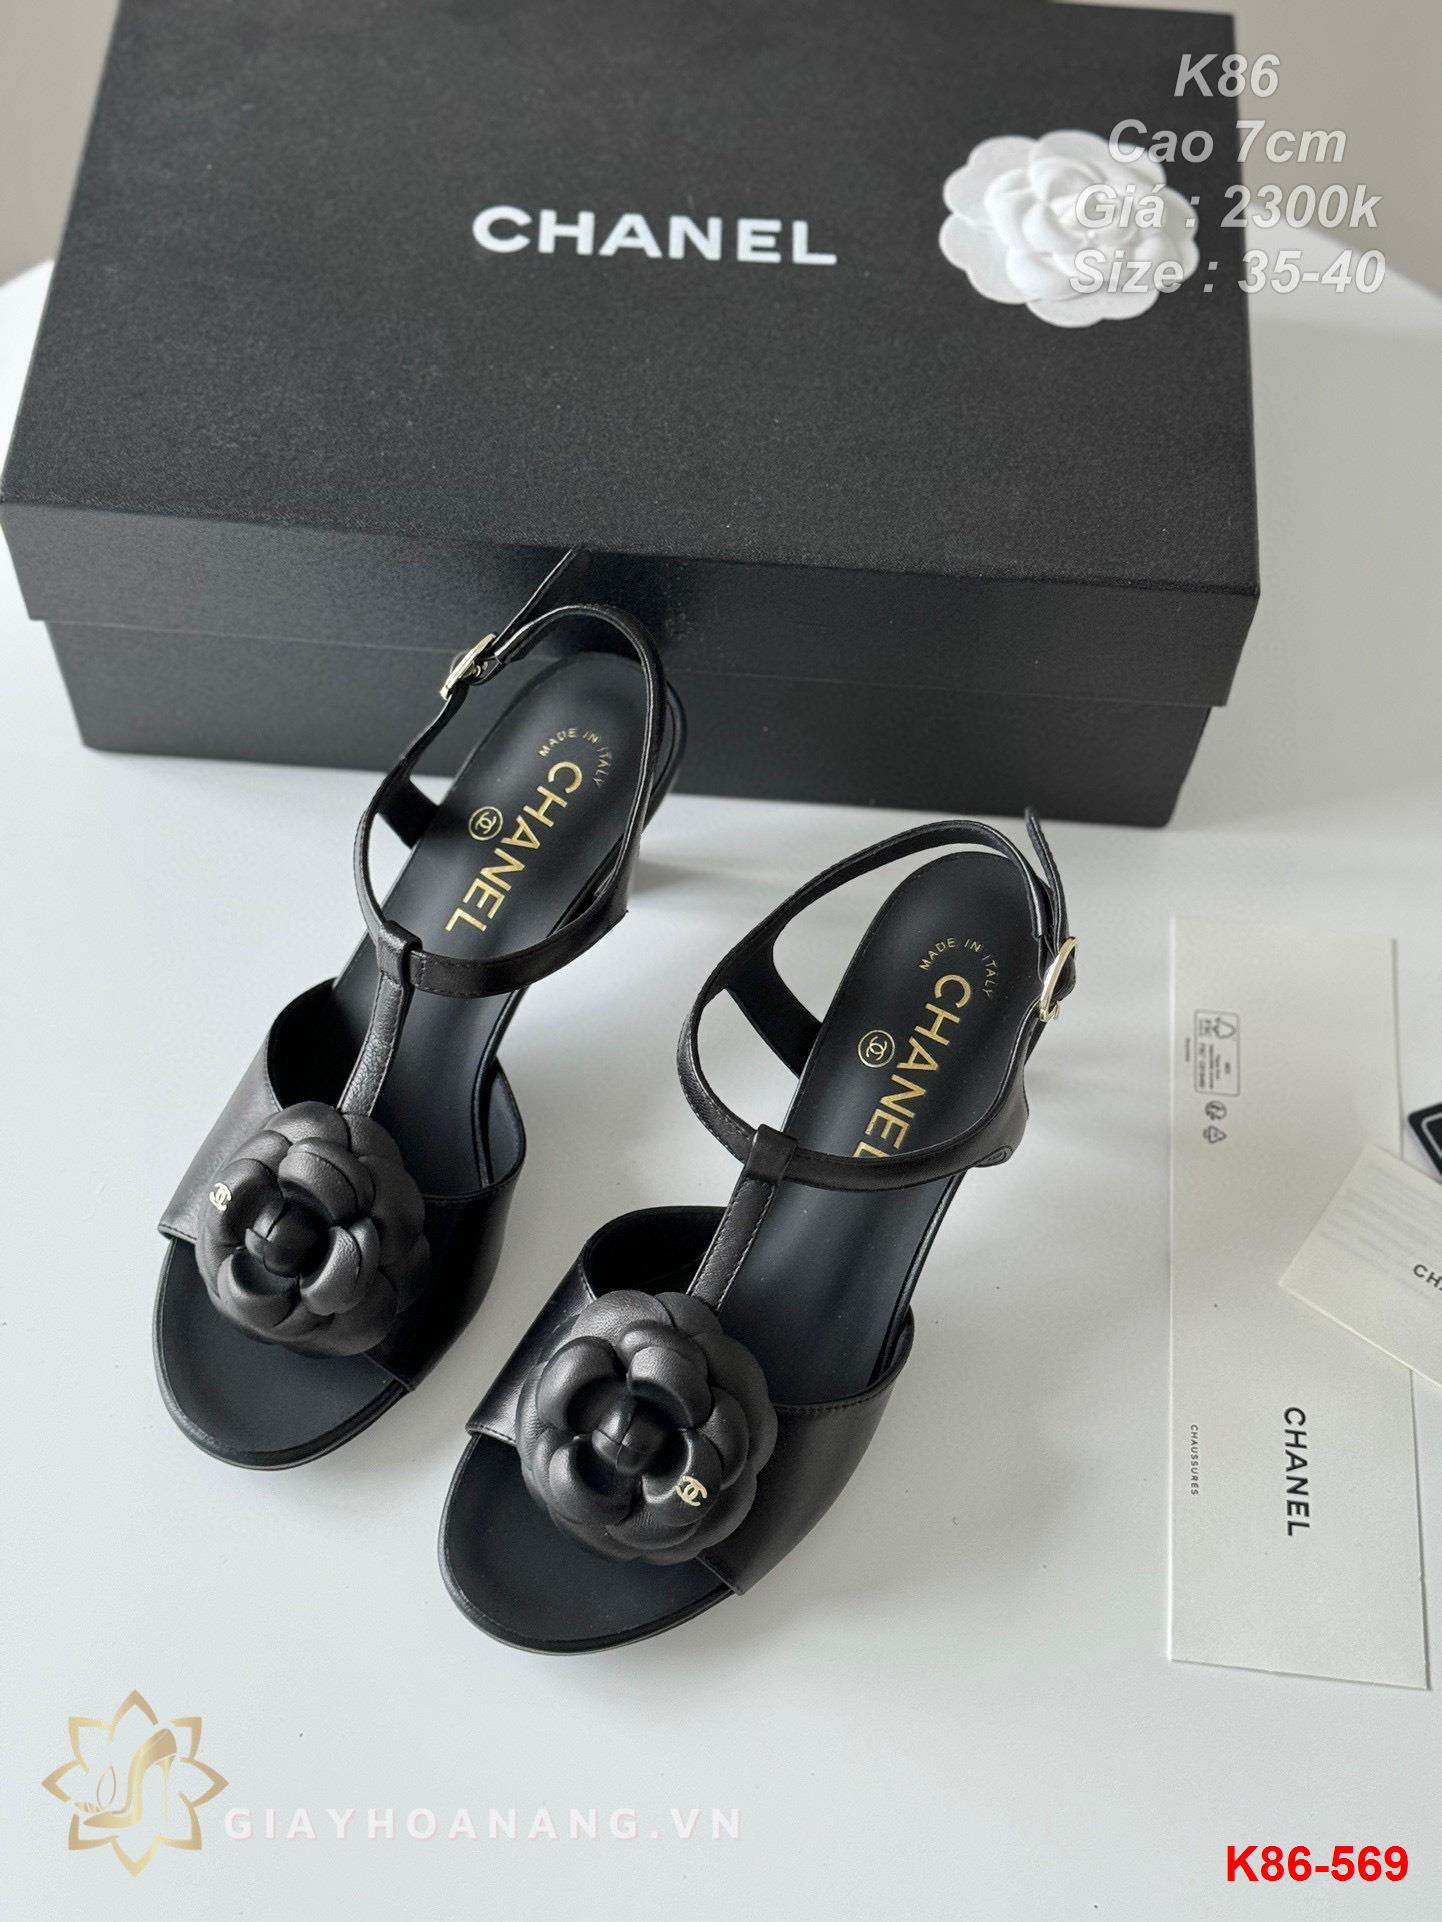 K86-569 Chanel sandal cao 7cm siêu cấp